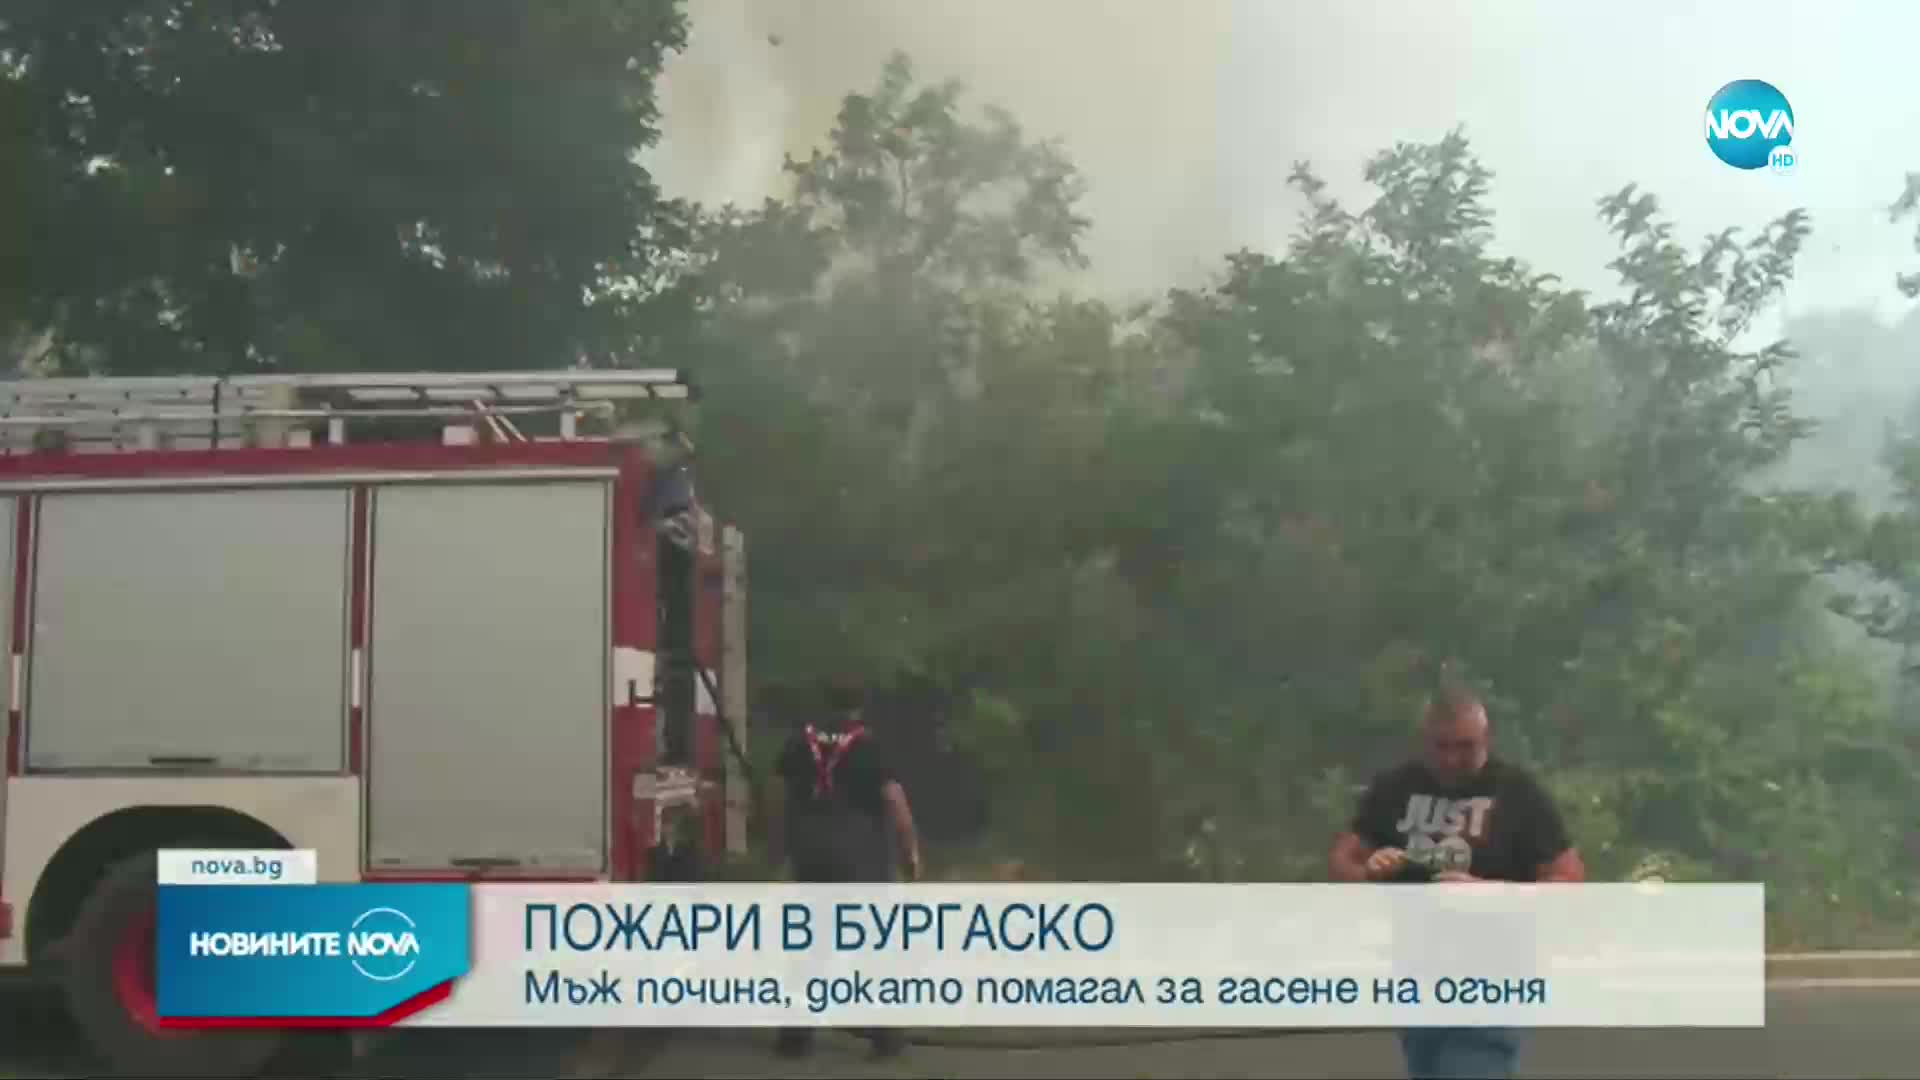 Мъж почина, докато помагал за гасене на пожар в Бургаско